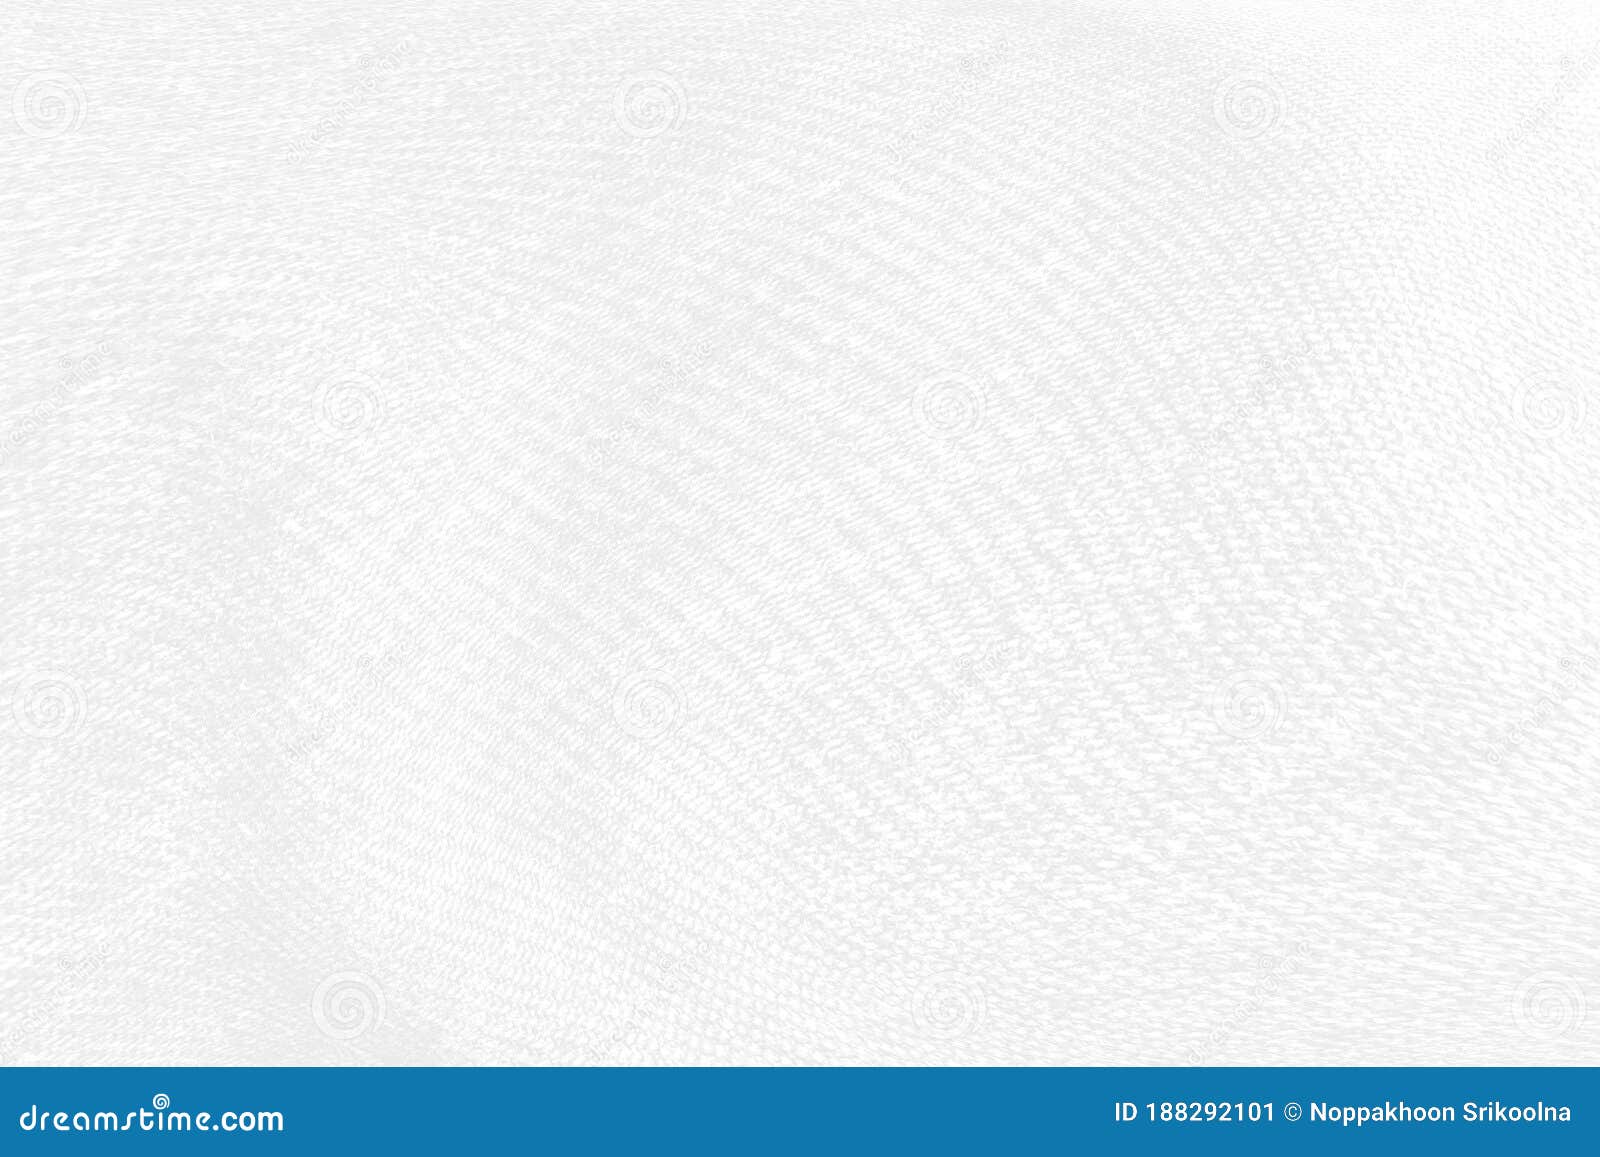 10 Oz White Cotton Canvas Fabric | OnlineFabricStore